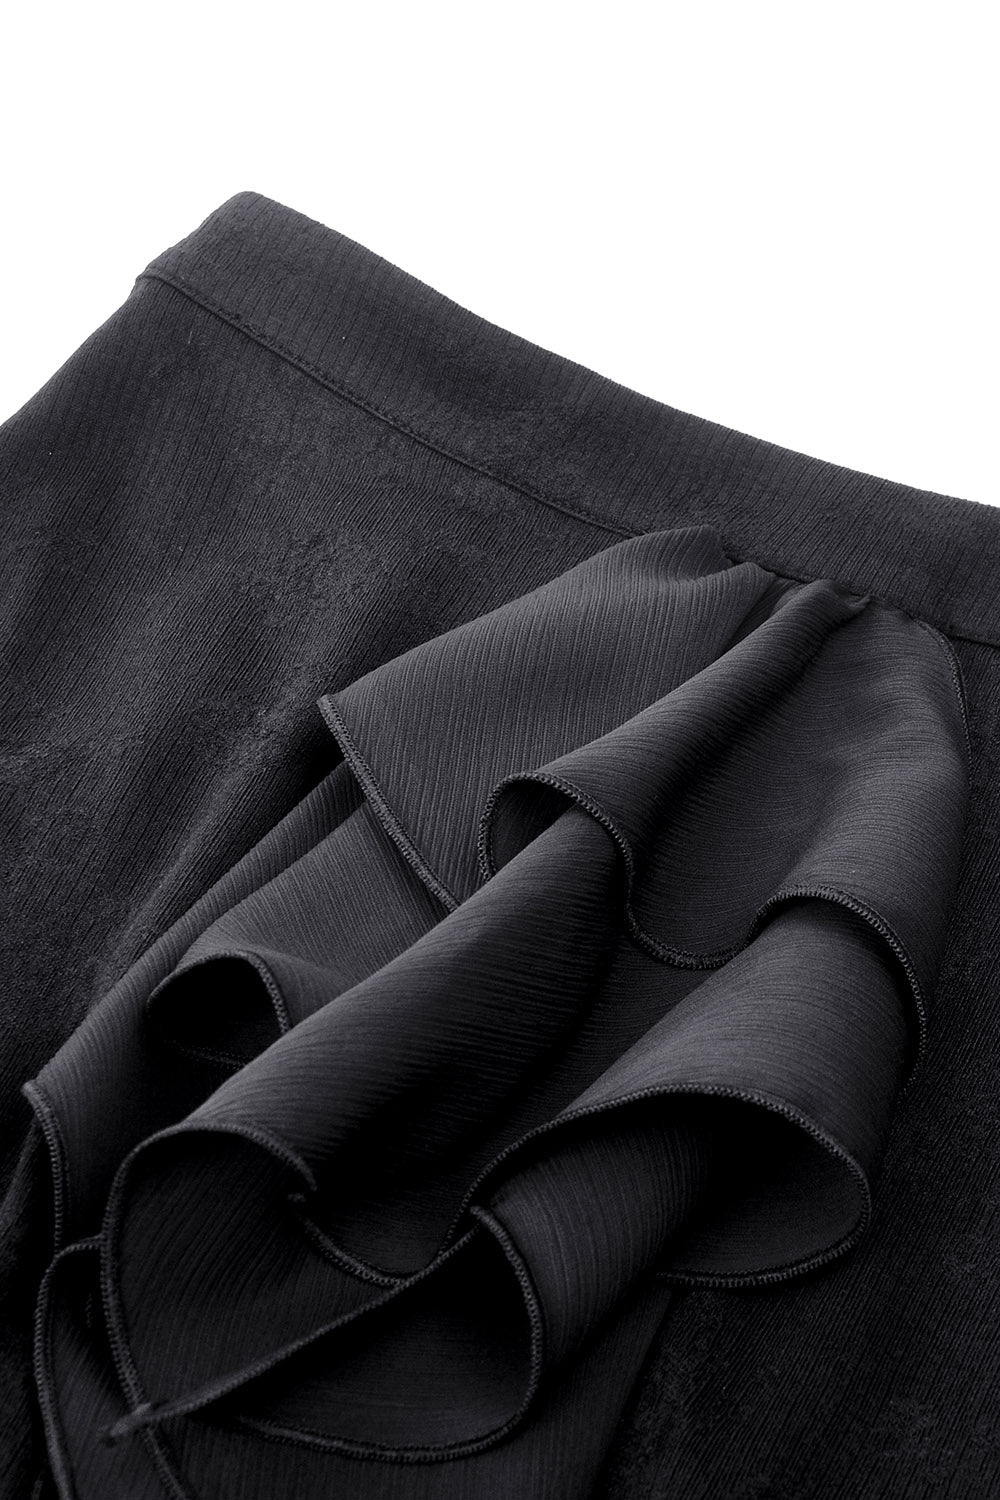 gothic black ruffled womens skirt made of rayon blend